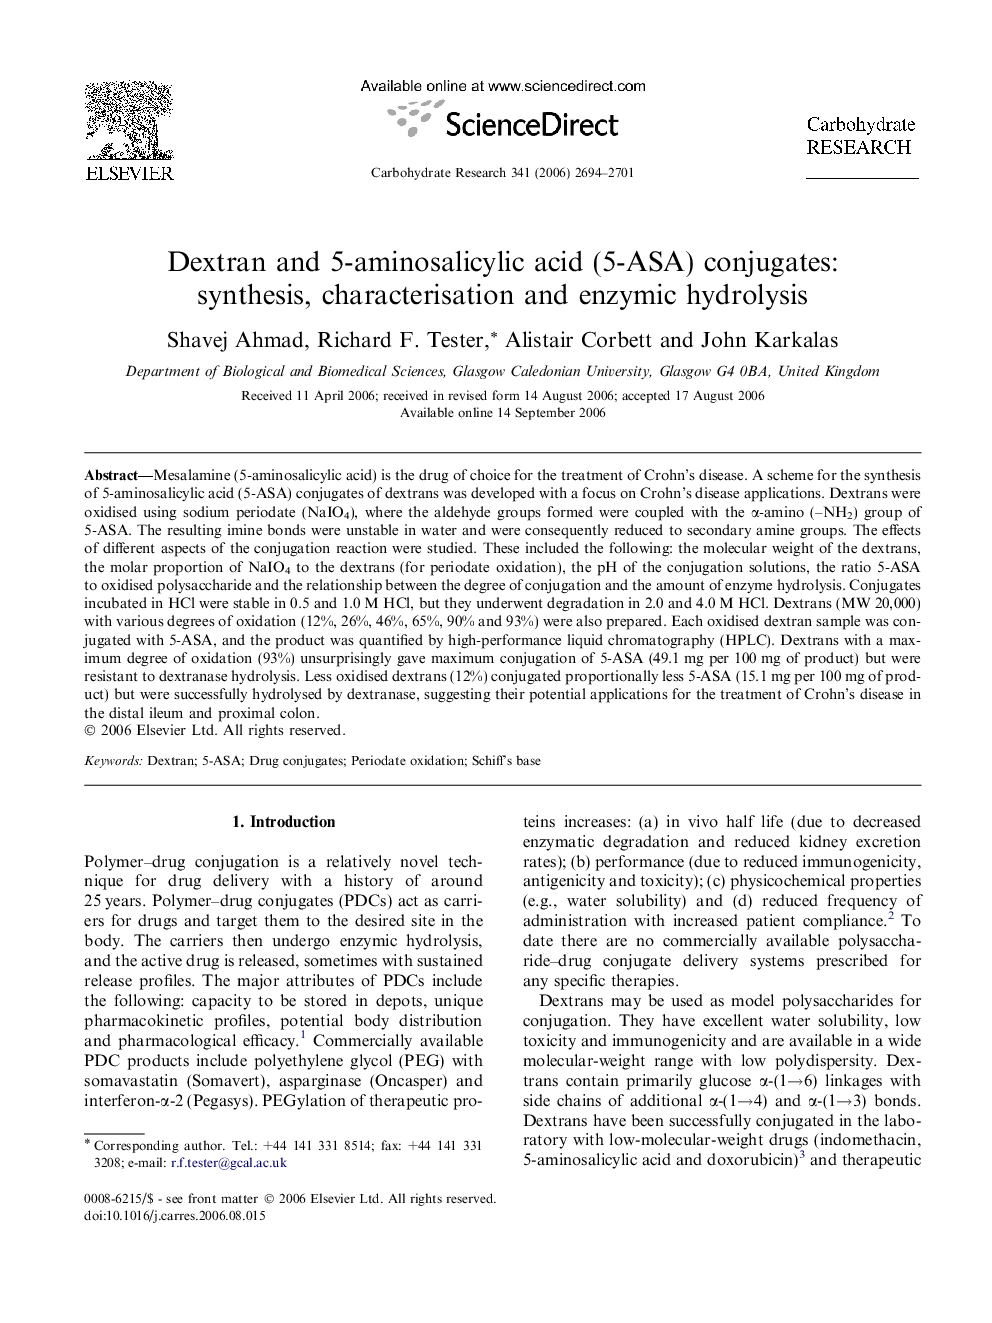 Dextran and 5-aminosalicylic acid (5-ASA) conjugates: synthesis, characterisation and enzymic hydrolysis